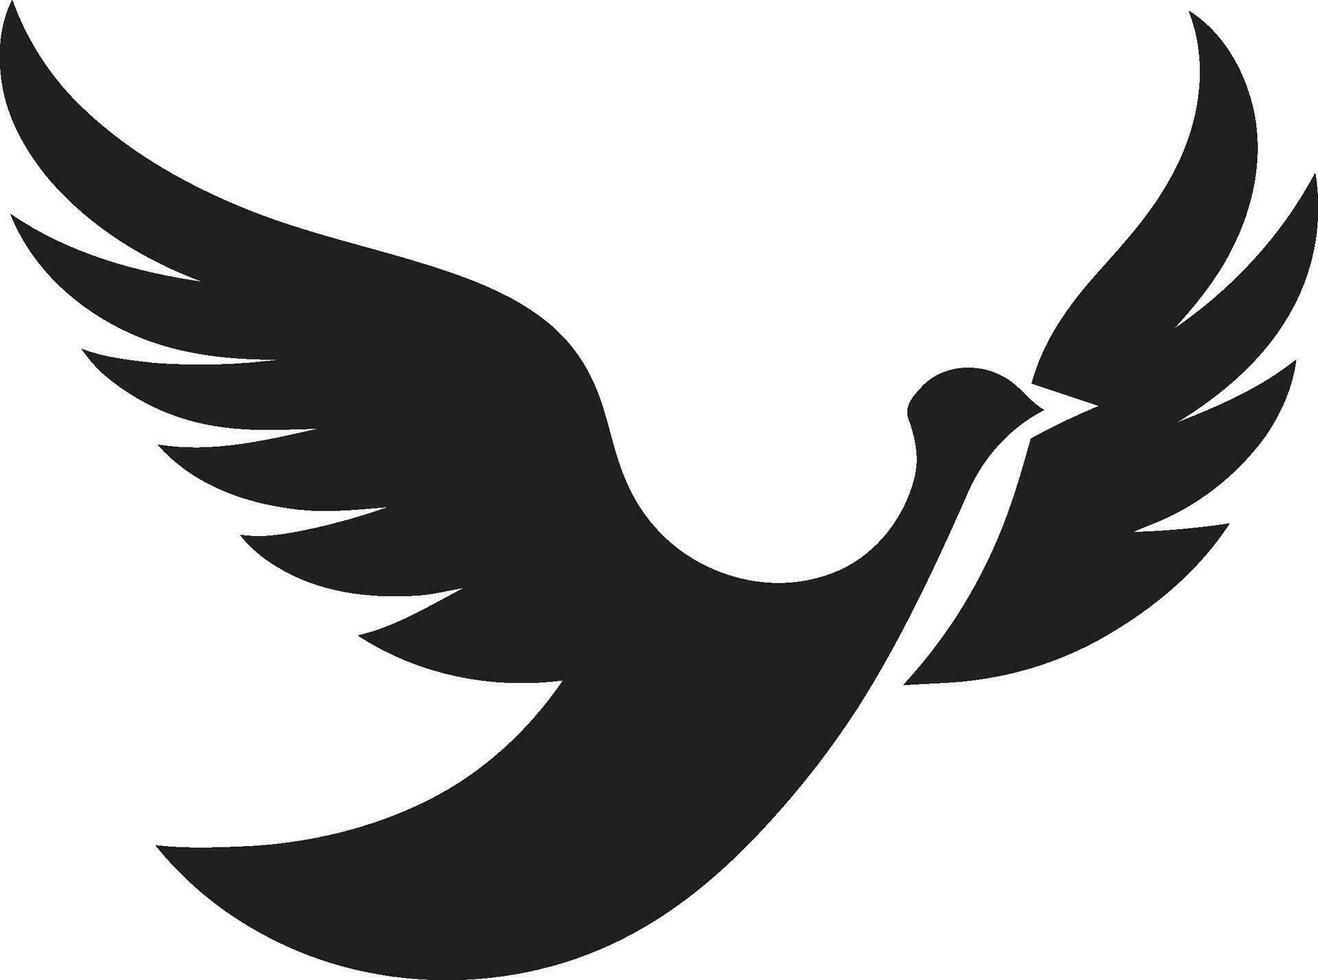 Minimalist Black Dove Vector Logo A Simple Yet Effective Design Abstract Black Dove Vector Logo A Unique and Creative Design